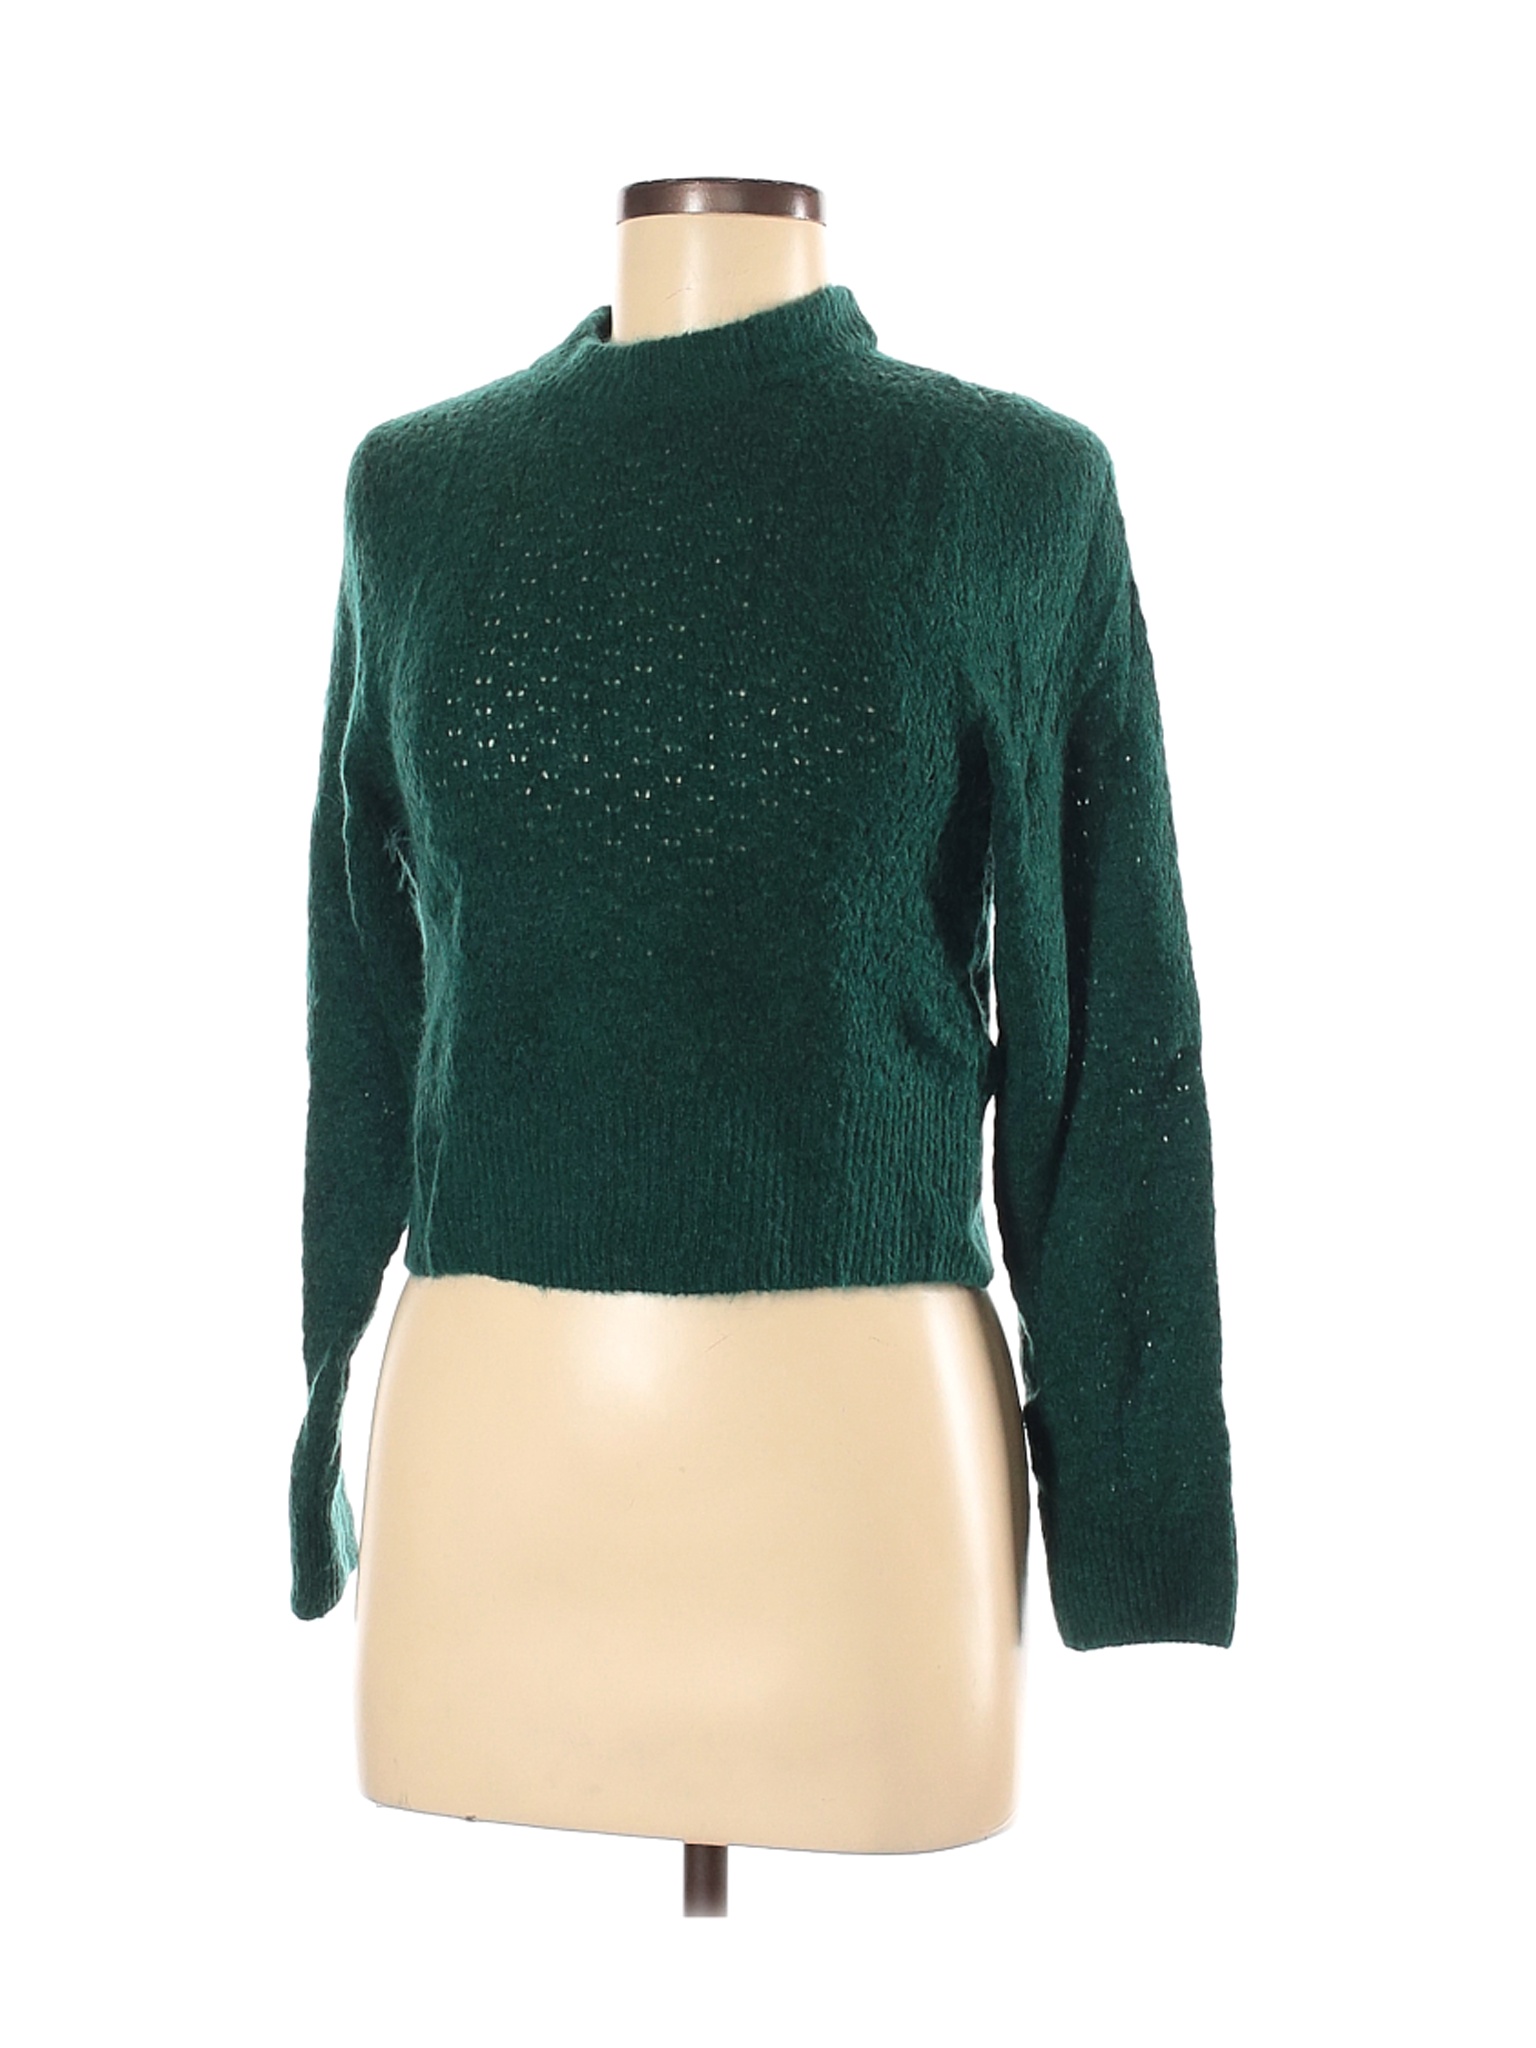 H&M Women Green Pullover Sweater XS | eBay